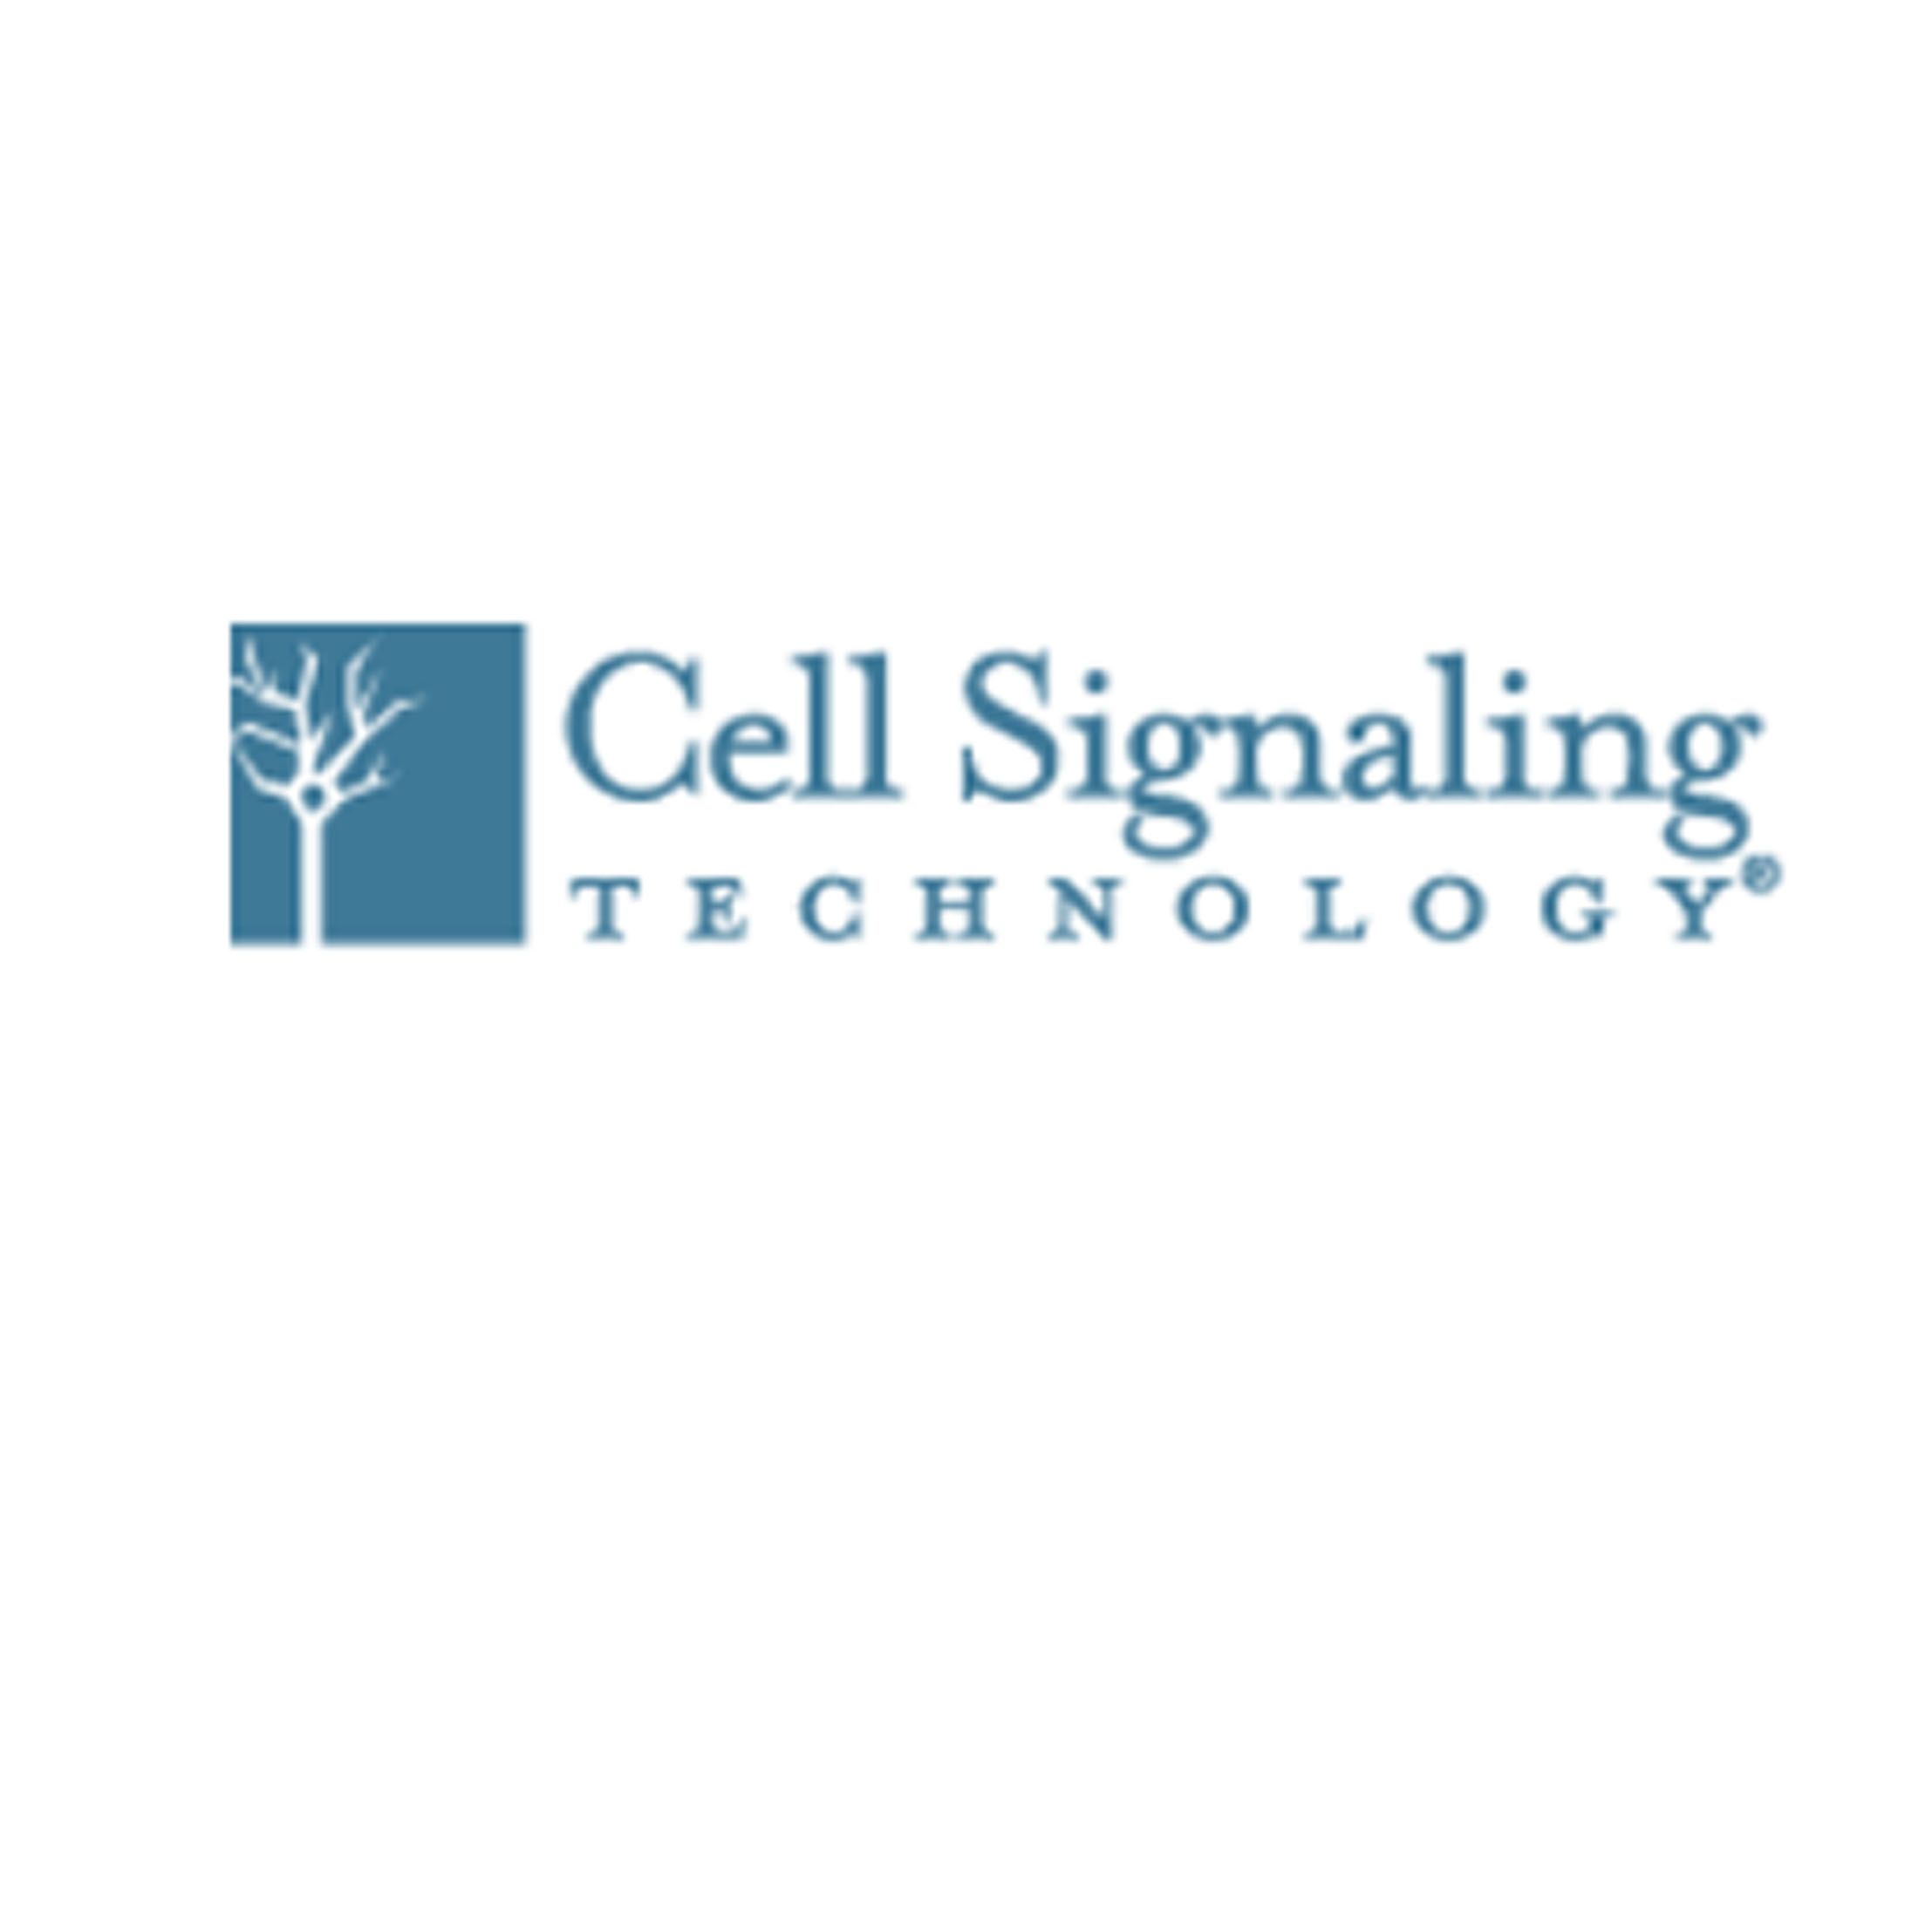 CST Cell Signaling Technology (CST) 抗体、试剂、蛋白质组学,现货